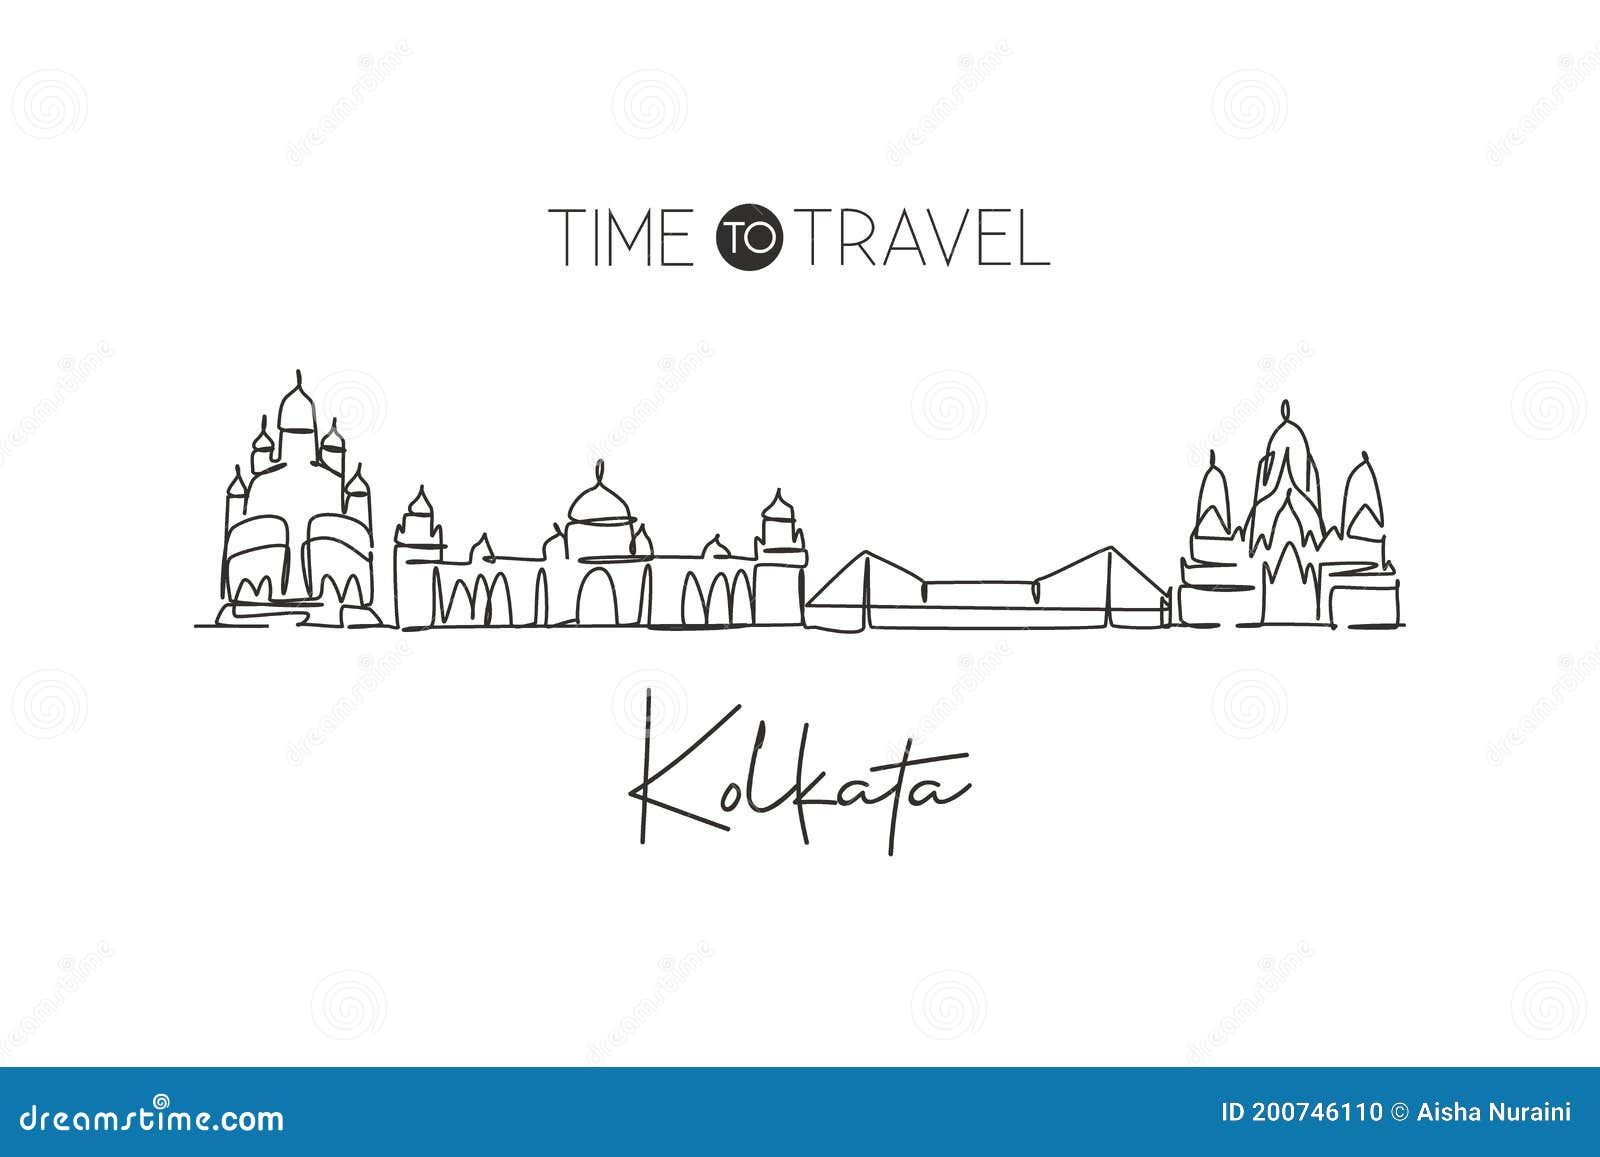 280 Kolkata City Sketch Images, Stock Photos, 3D objects, & Vectors |  Shutterstock